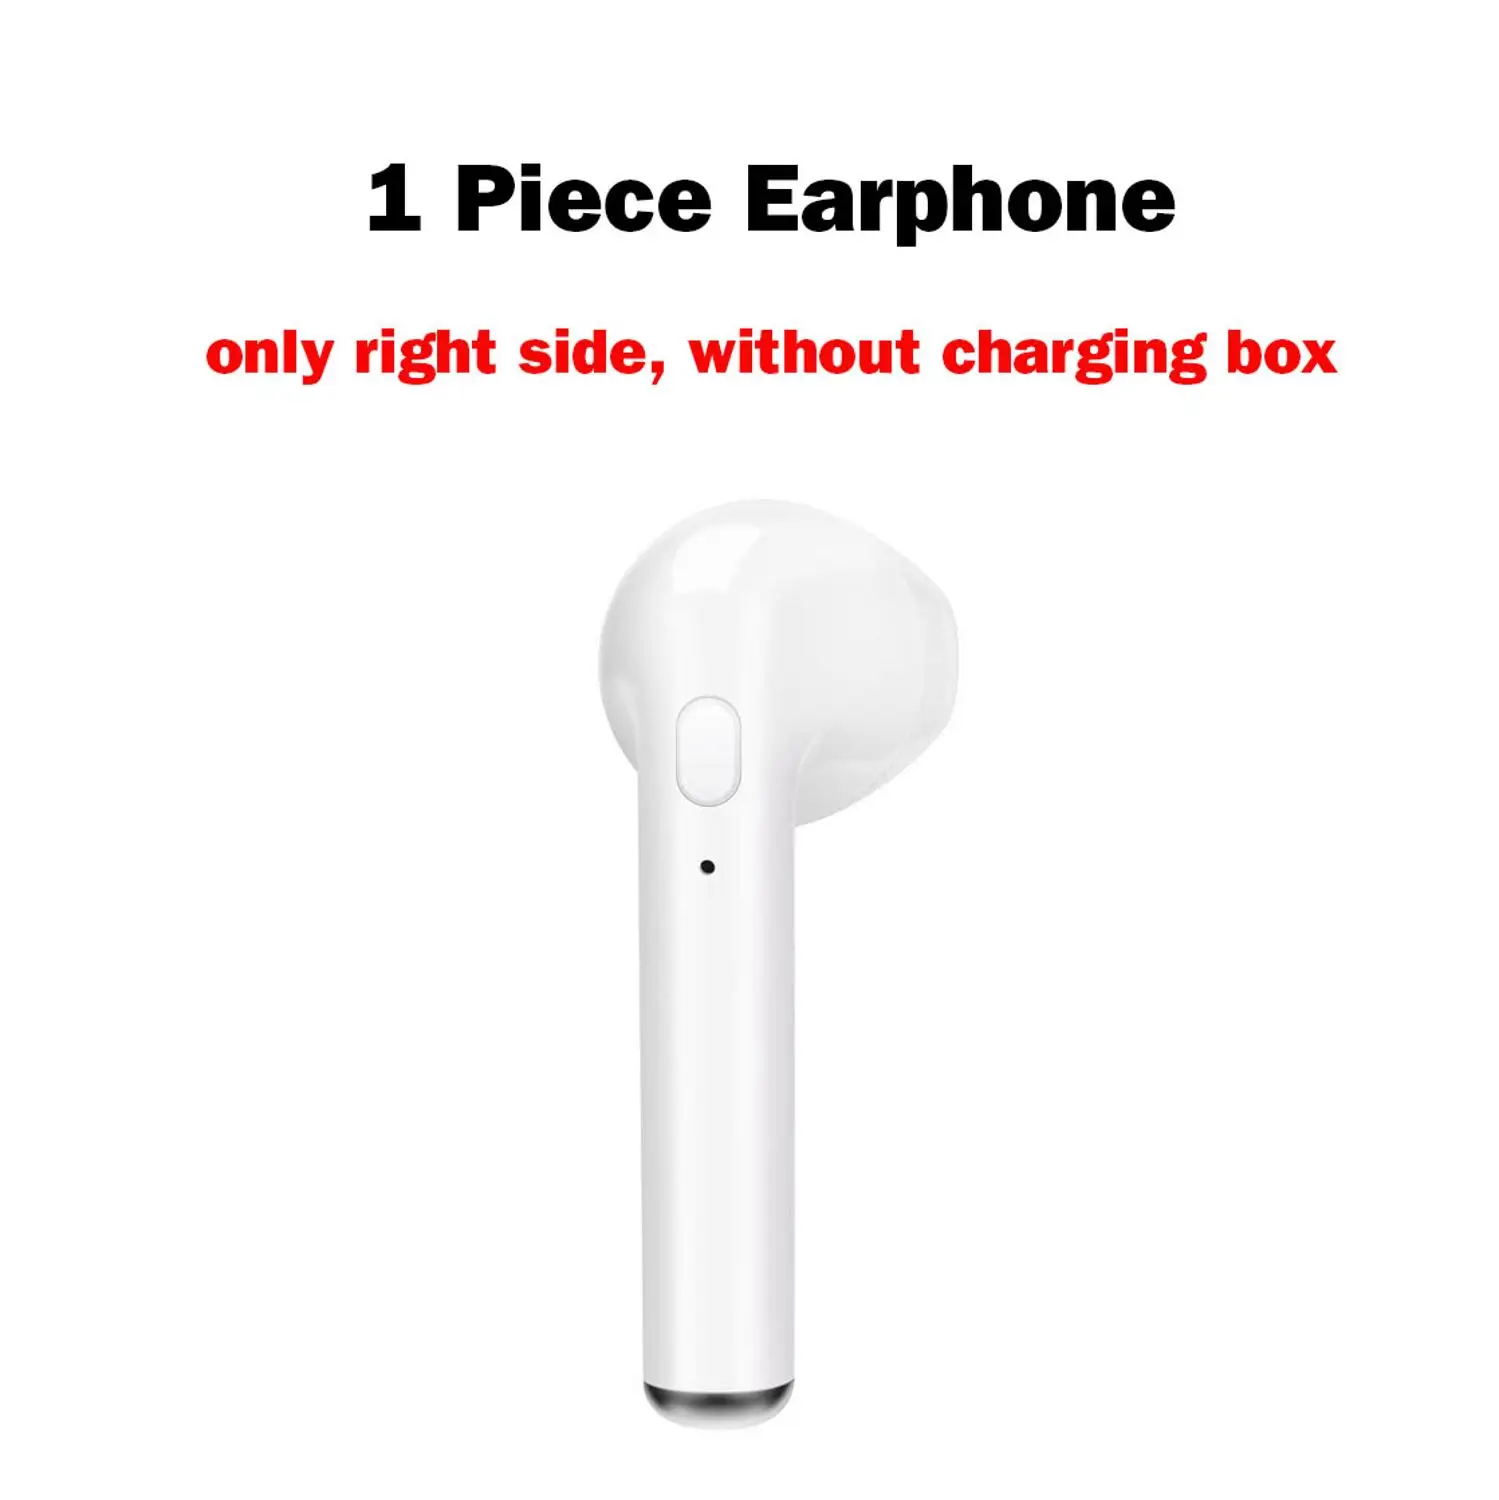 I7 i7s TWS беспроводной bluetooth-наушник наушники гарнитура с микрофоном для iPhone sunsung xiaomi Huawei; Lenovo htc LG TCL ect - Цвет: white single ear